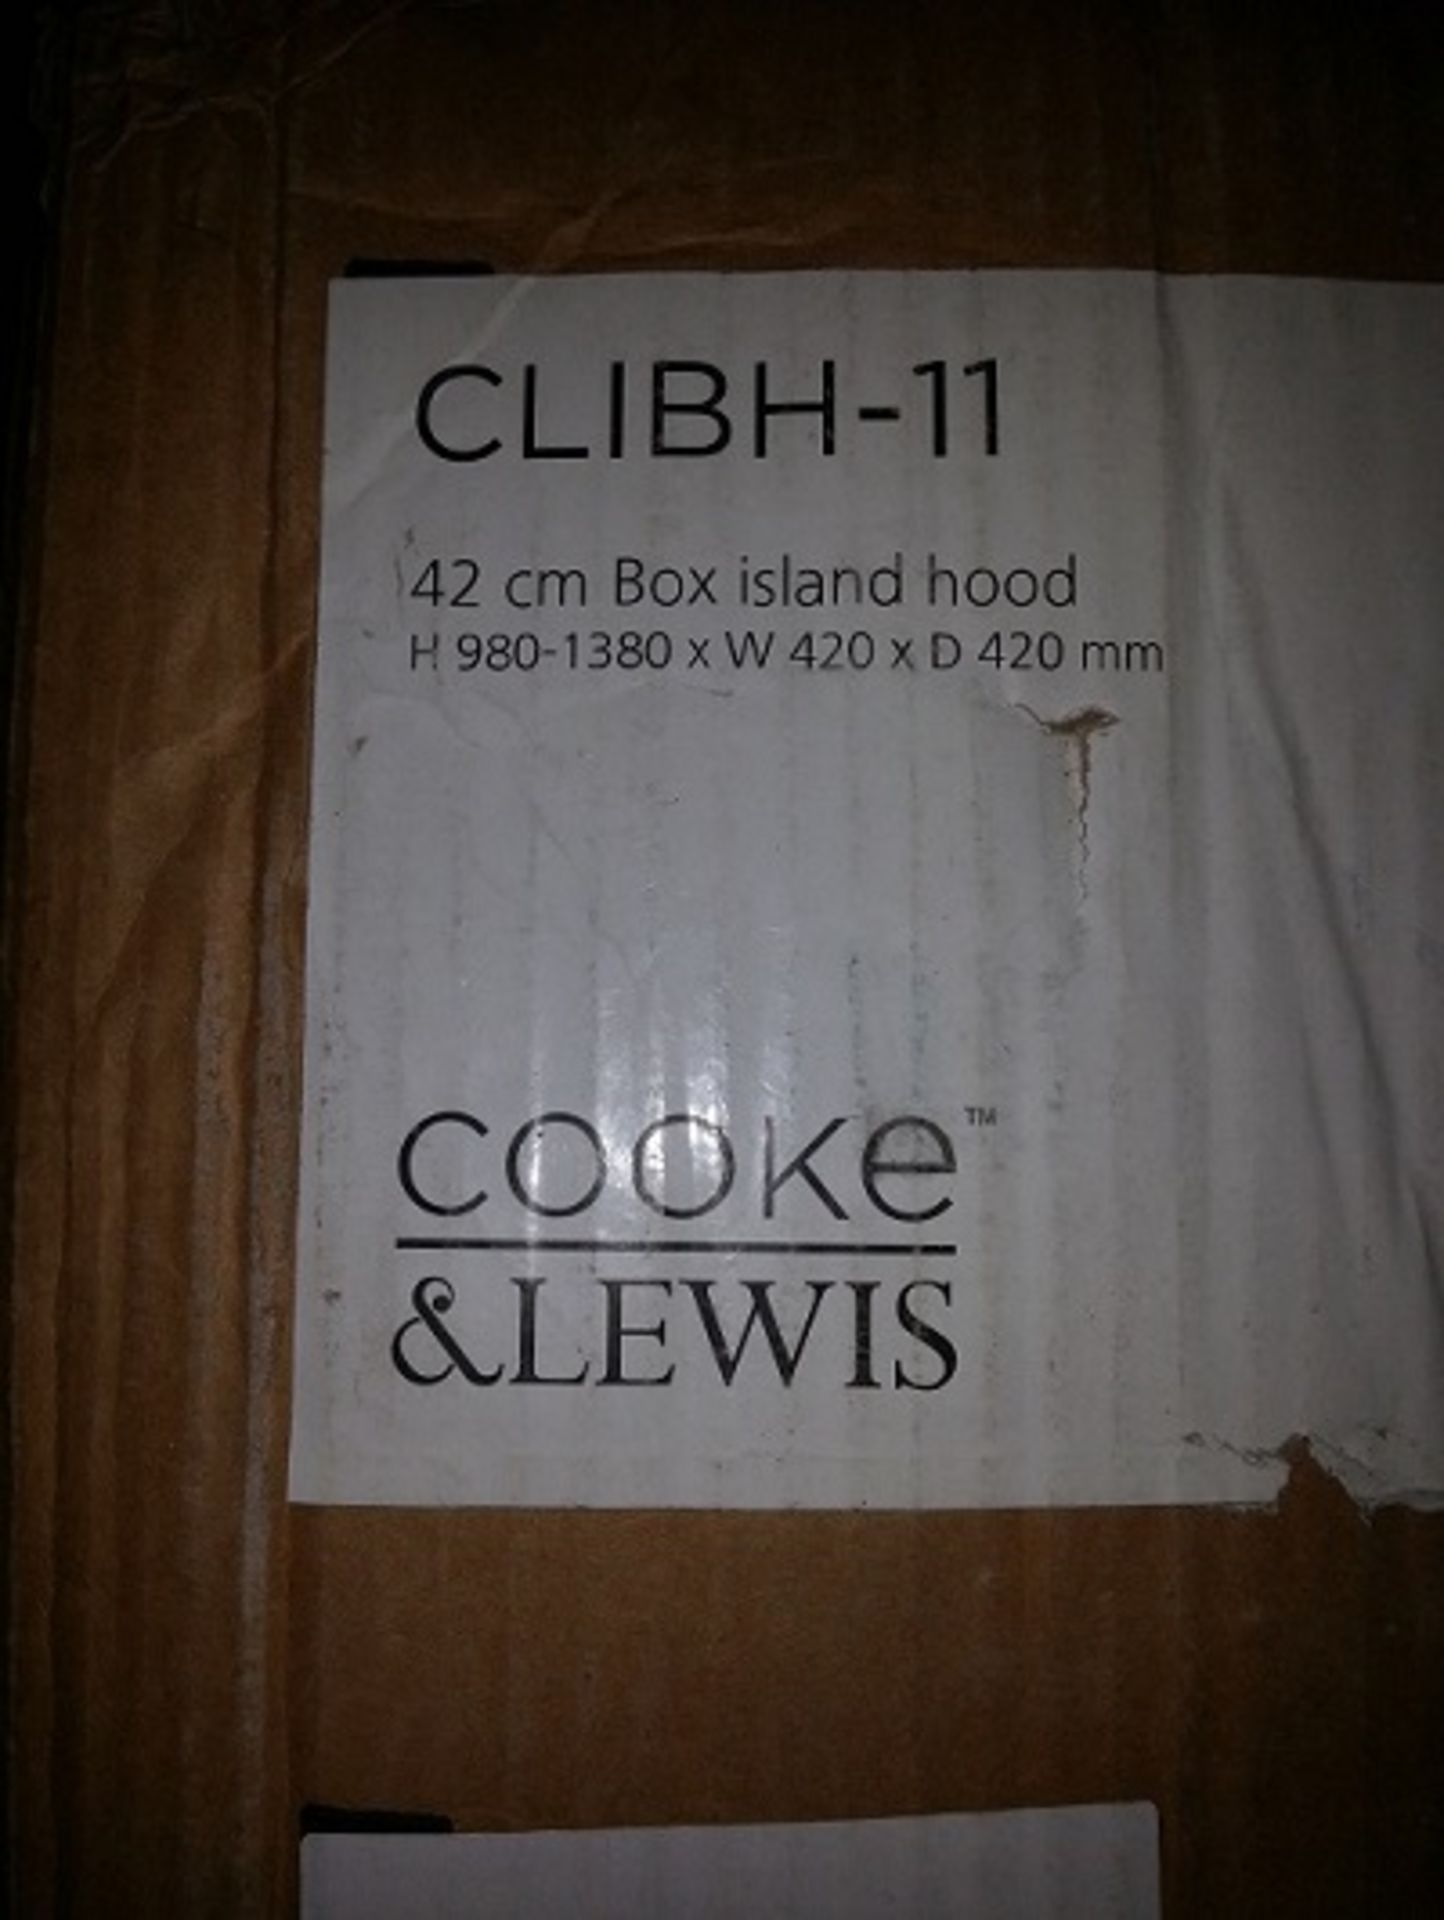 Cooke & LewisÊ CLBH-11 cooker hood - Image 2 of 2